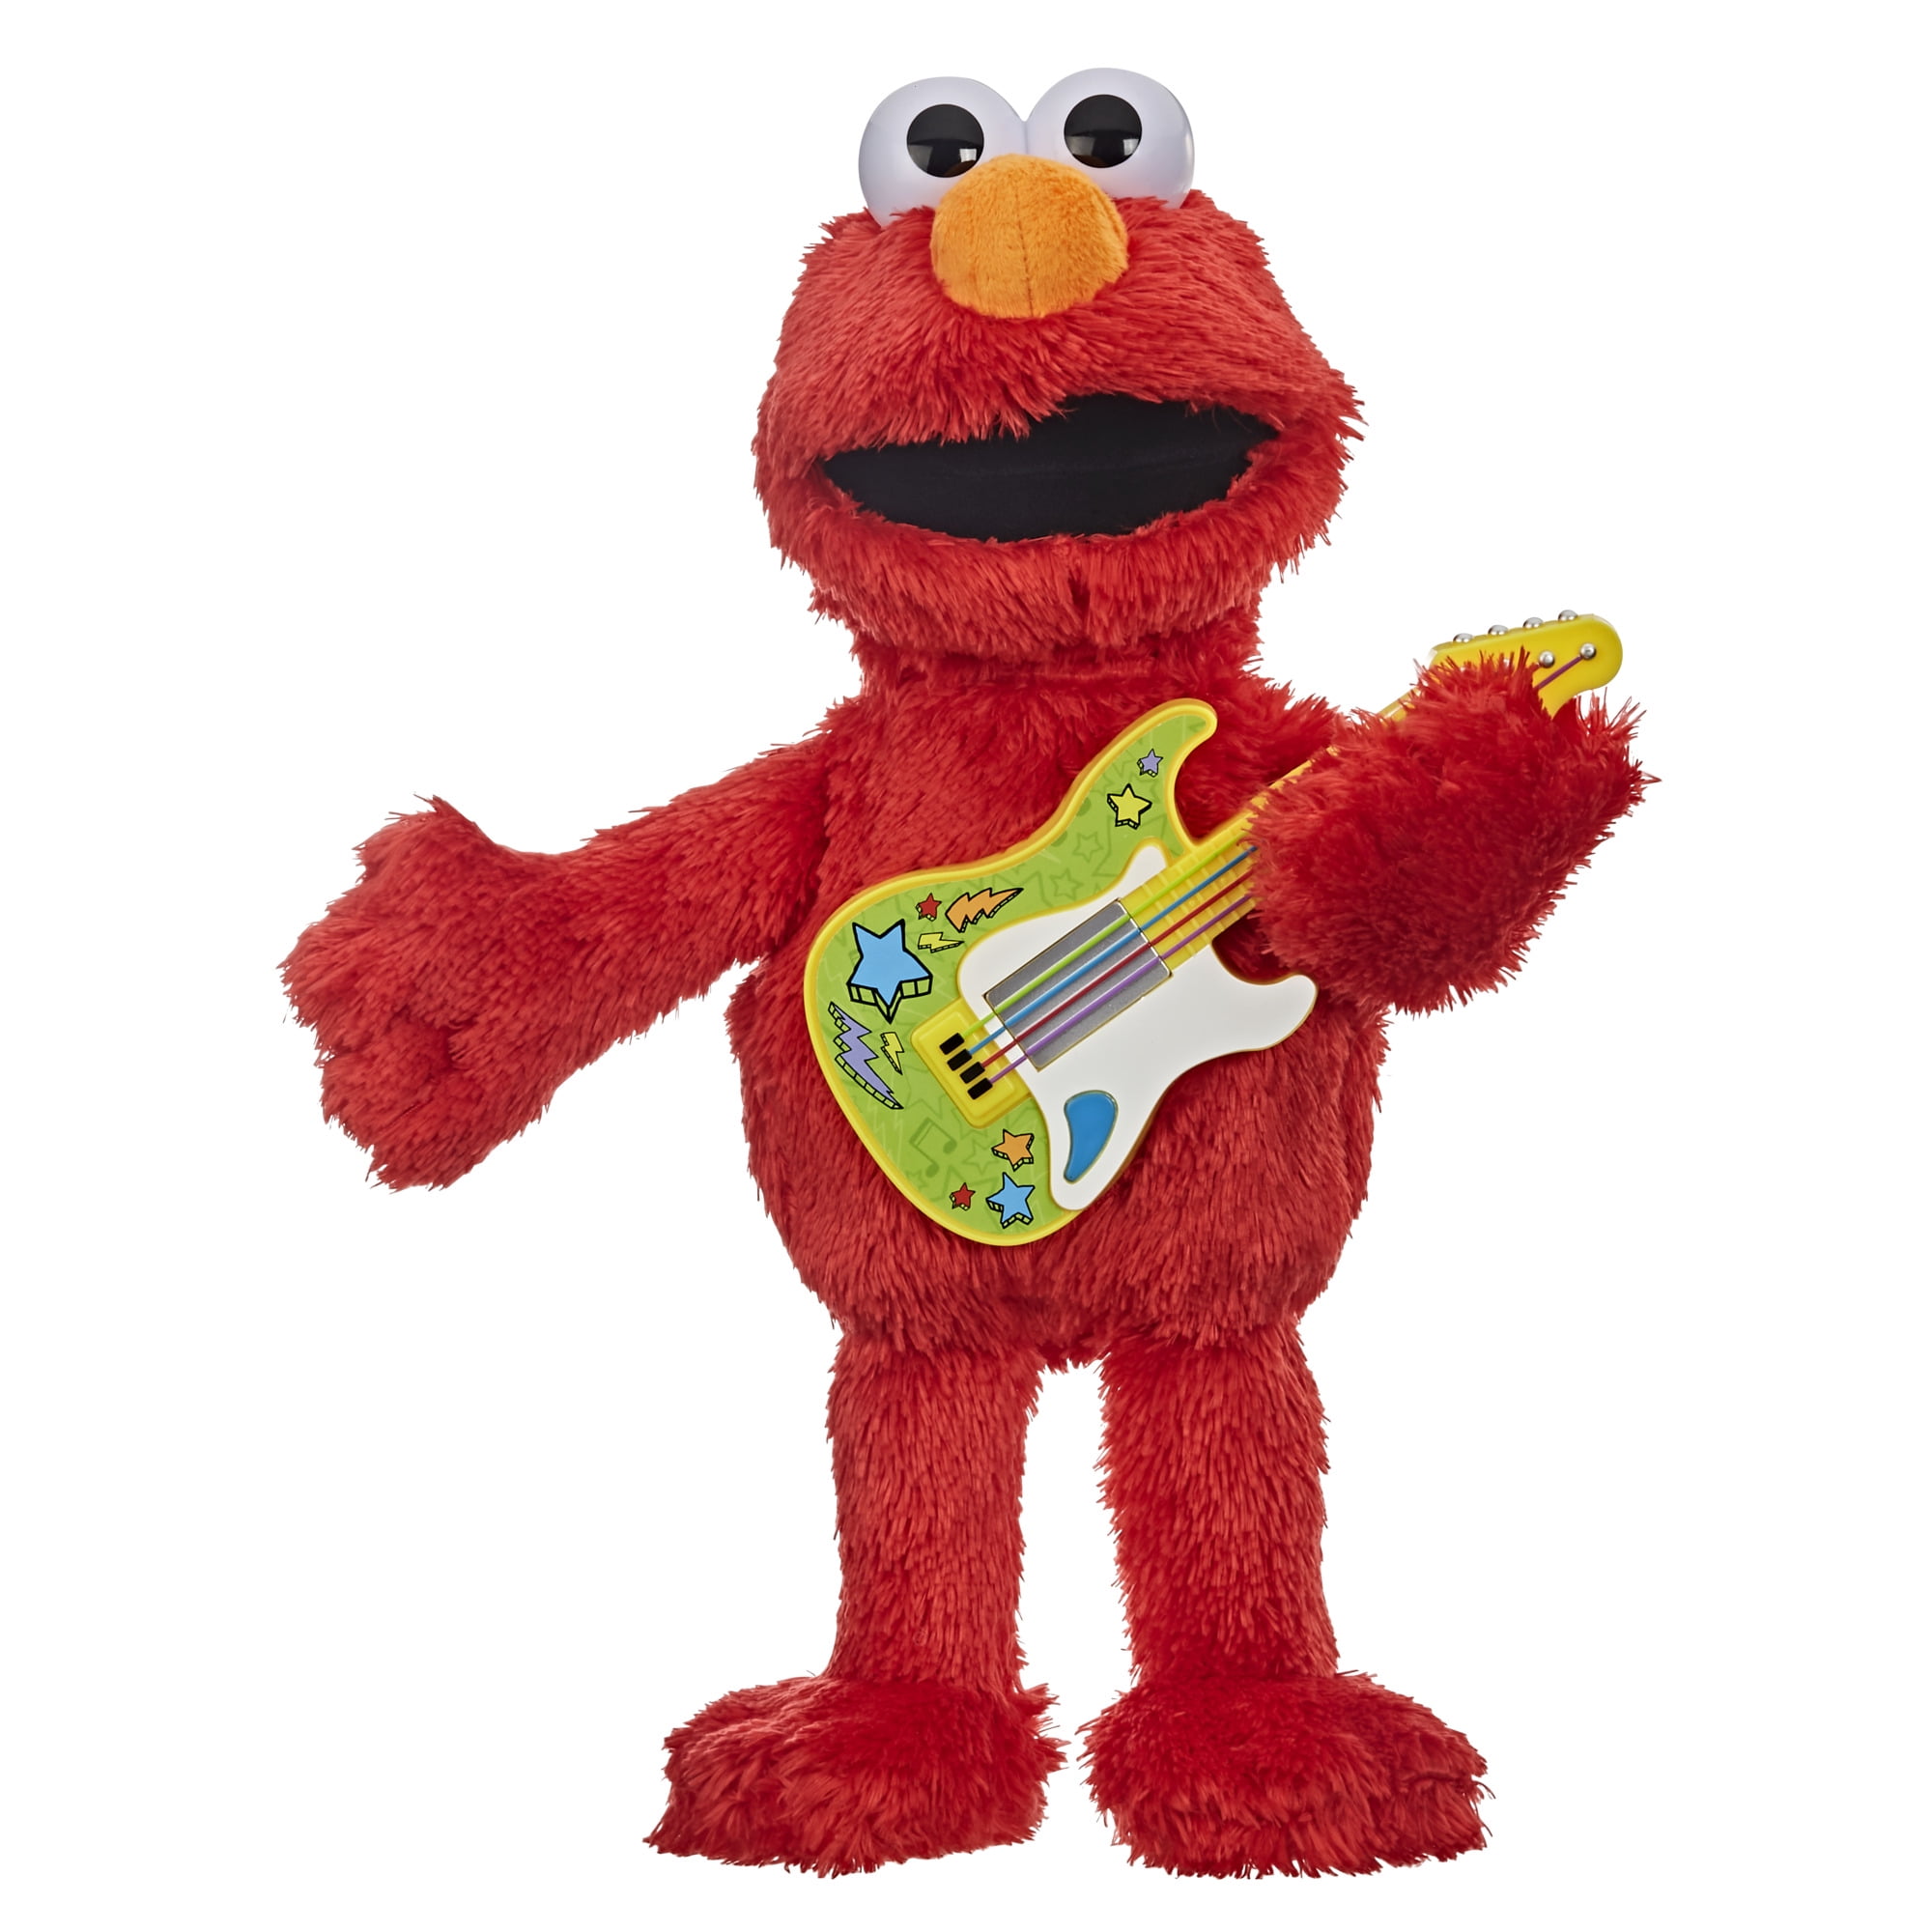 Sesame Street Rock And Rhyme Elmo Talking Singing 14 Inch Plush Figure Toy Walmart Com Walmart Com - elmo's world roblox id loud